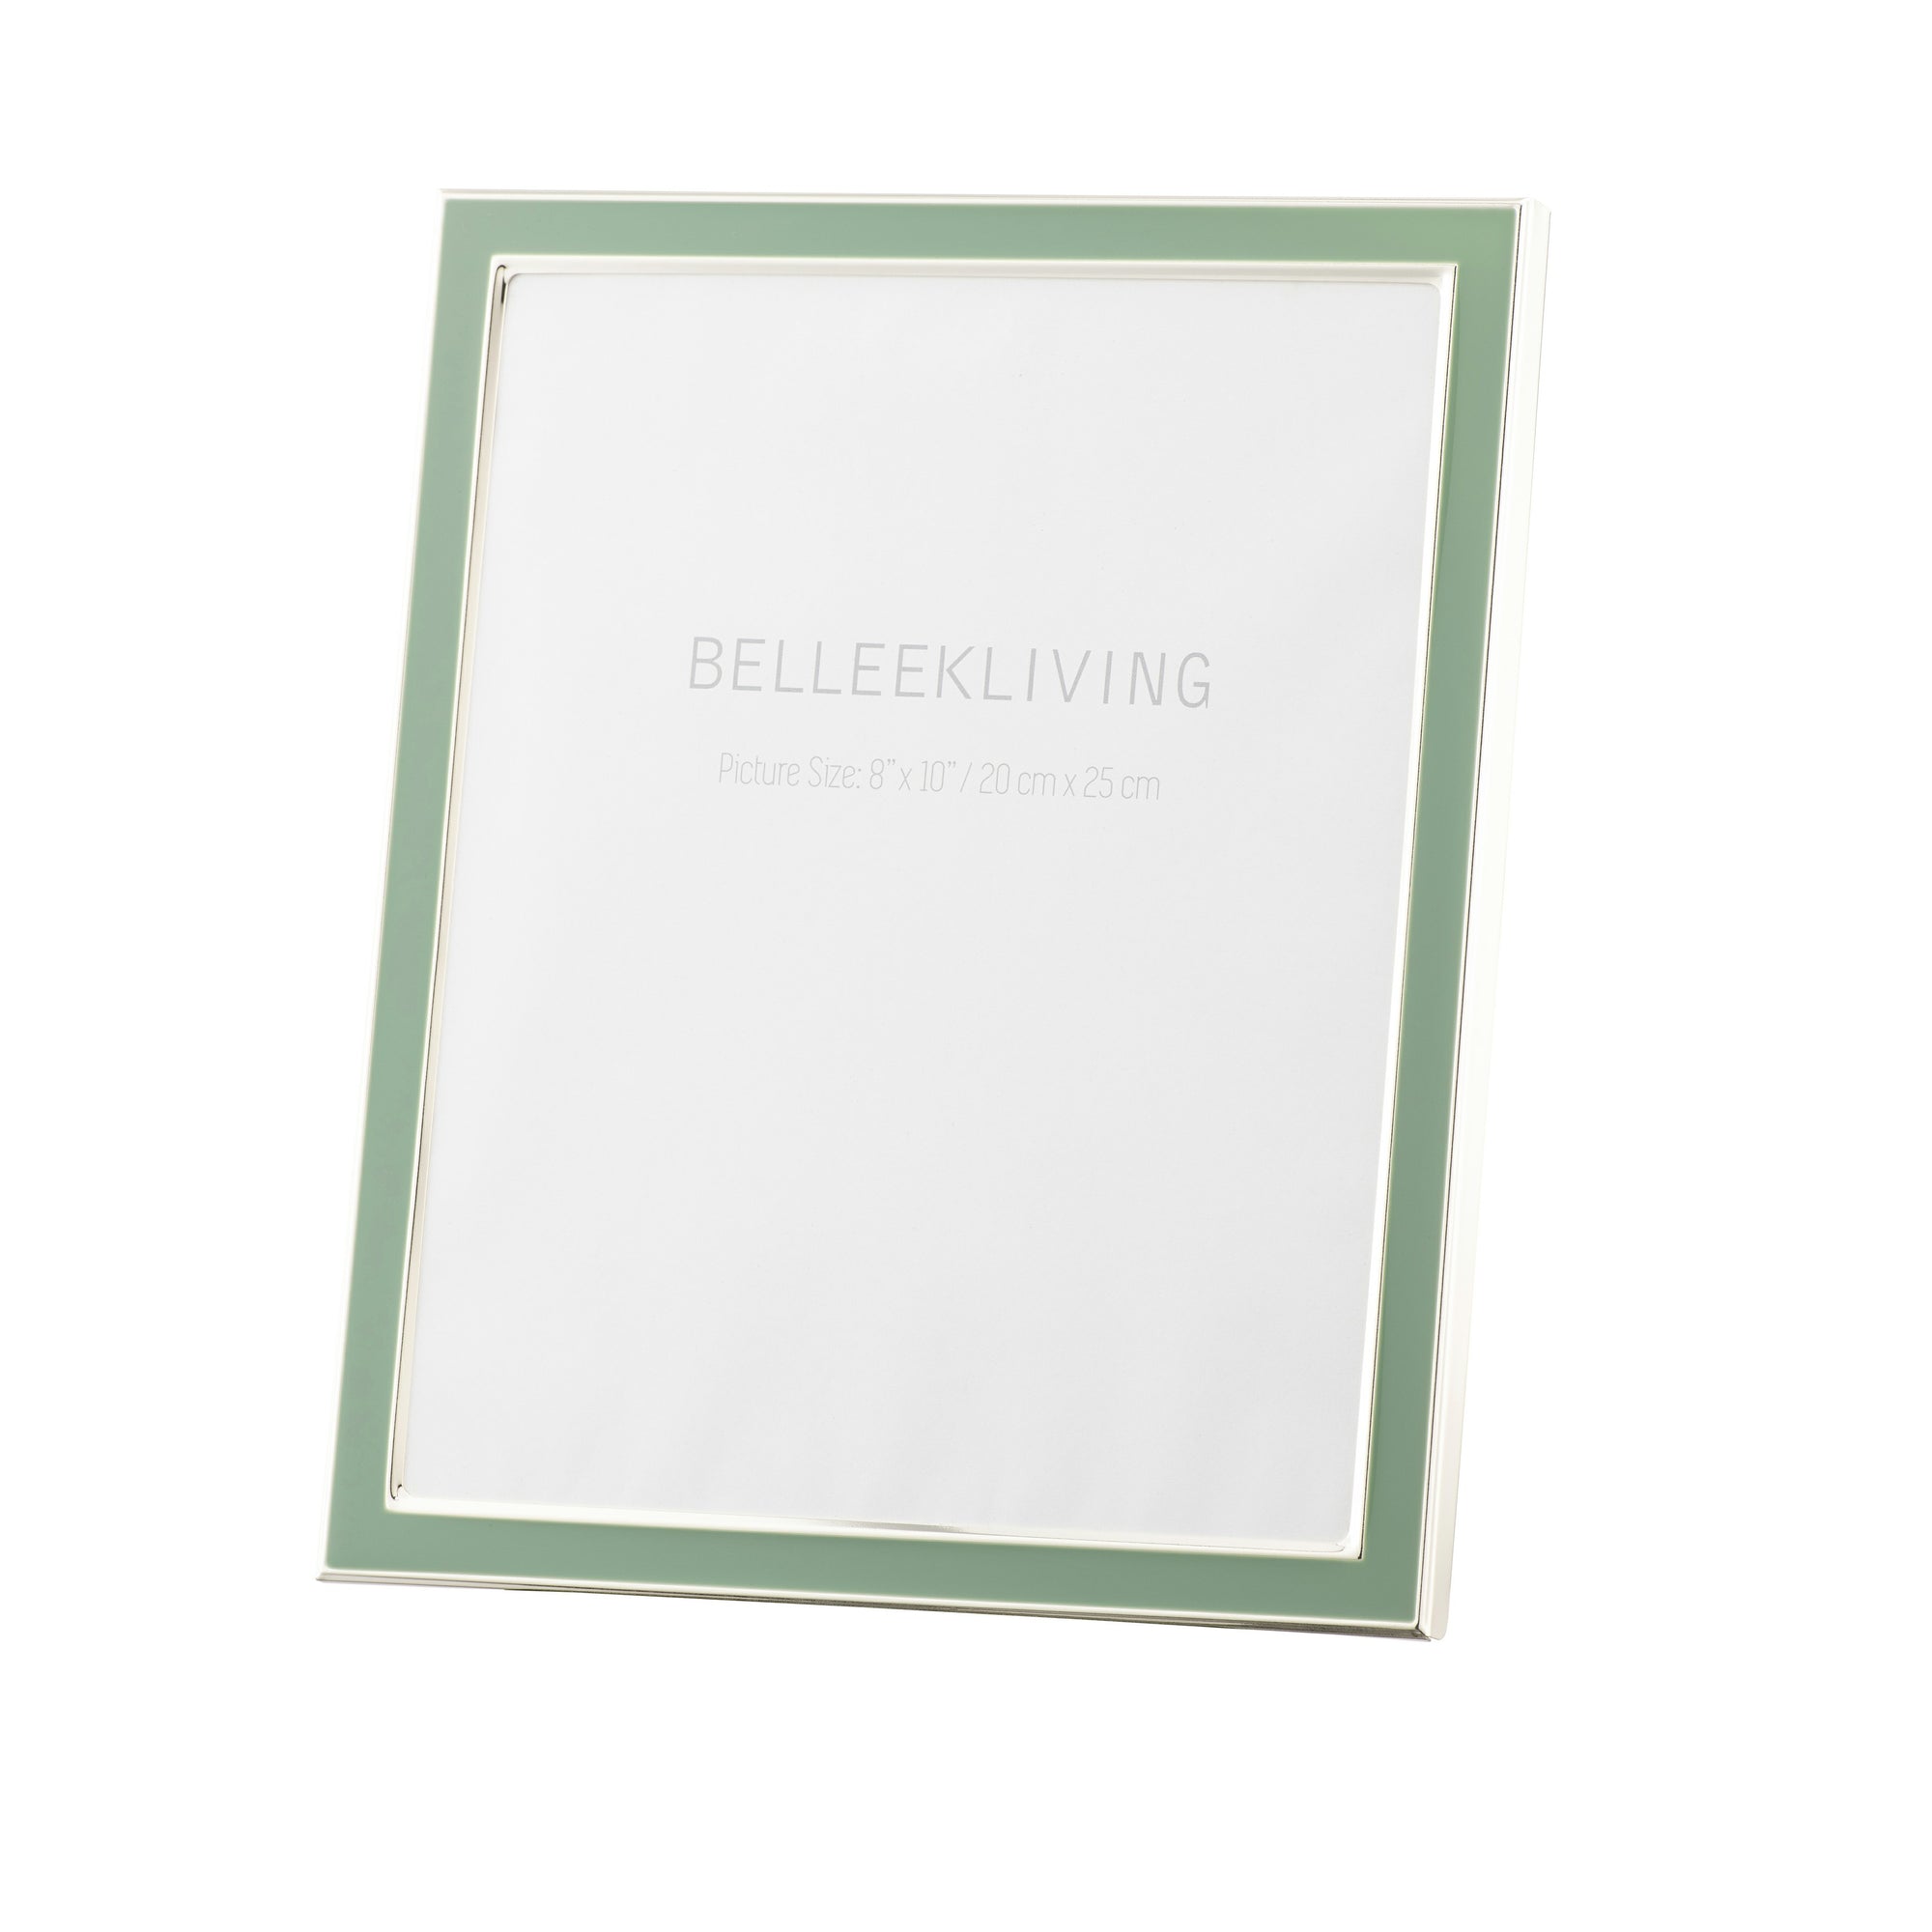 Belleek Living Teal 8 x 10 Inch Frame